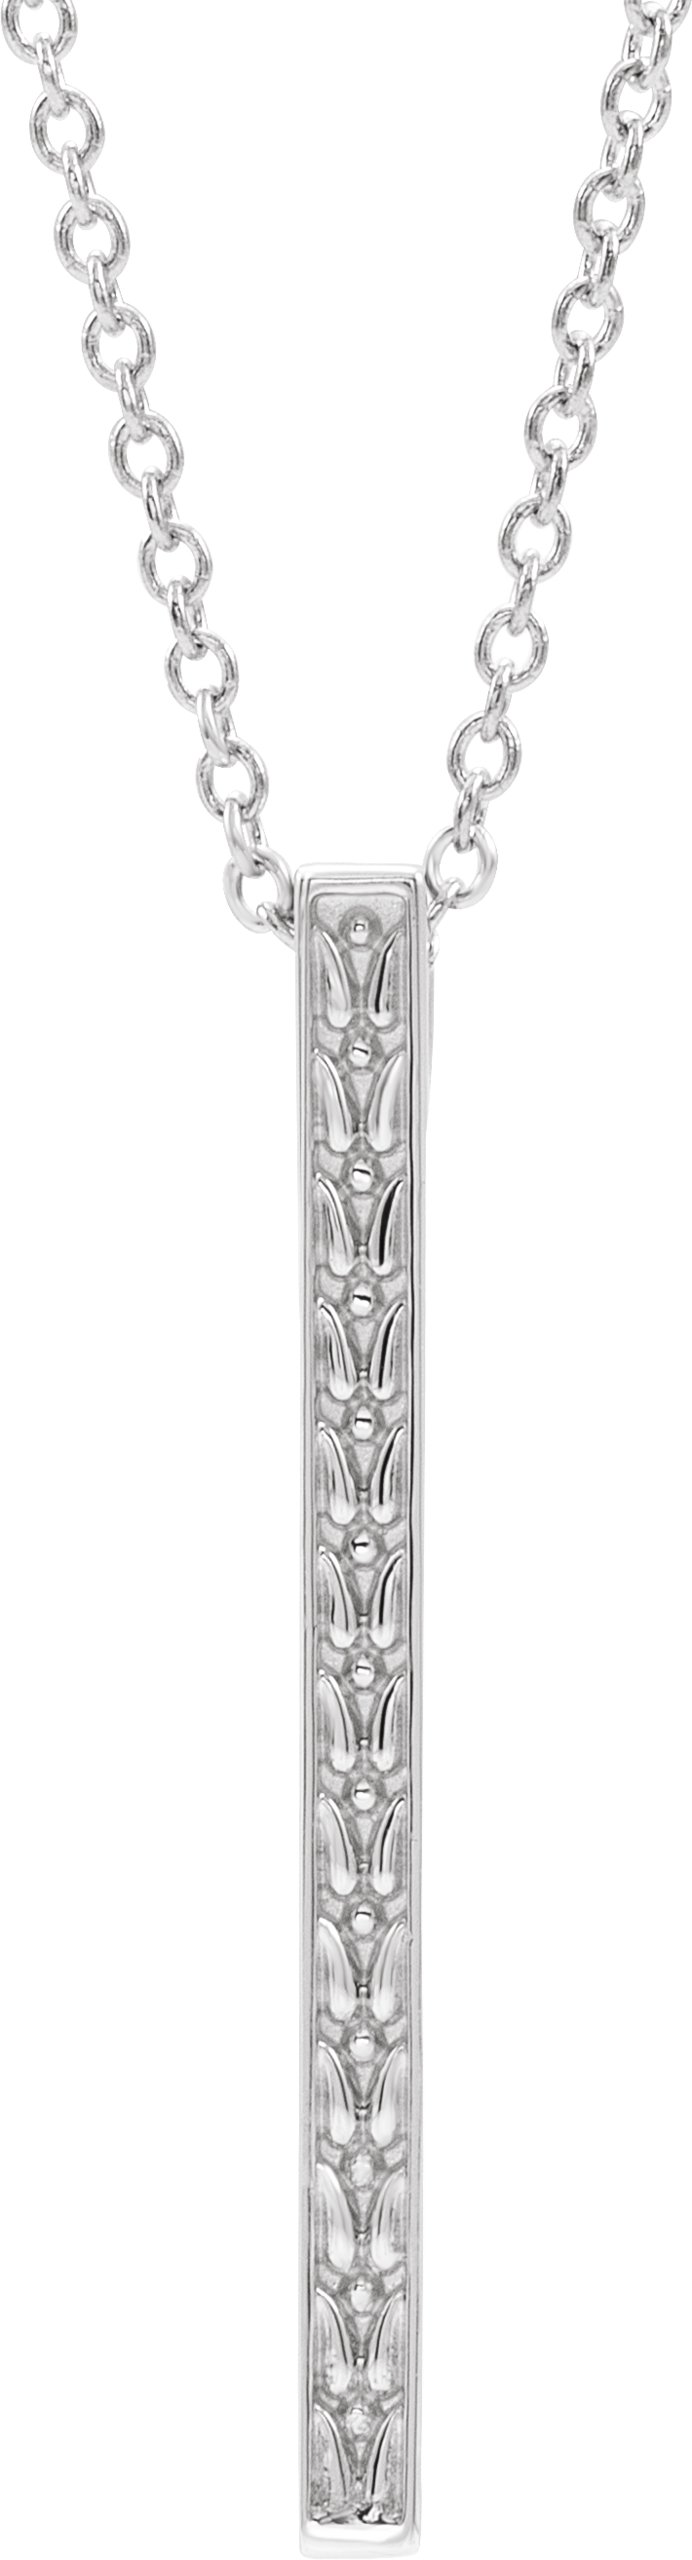 Sterling Silver Sculptural-Inspired Bar 24" Necklace